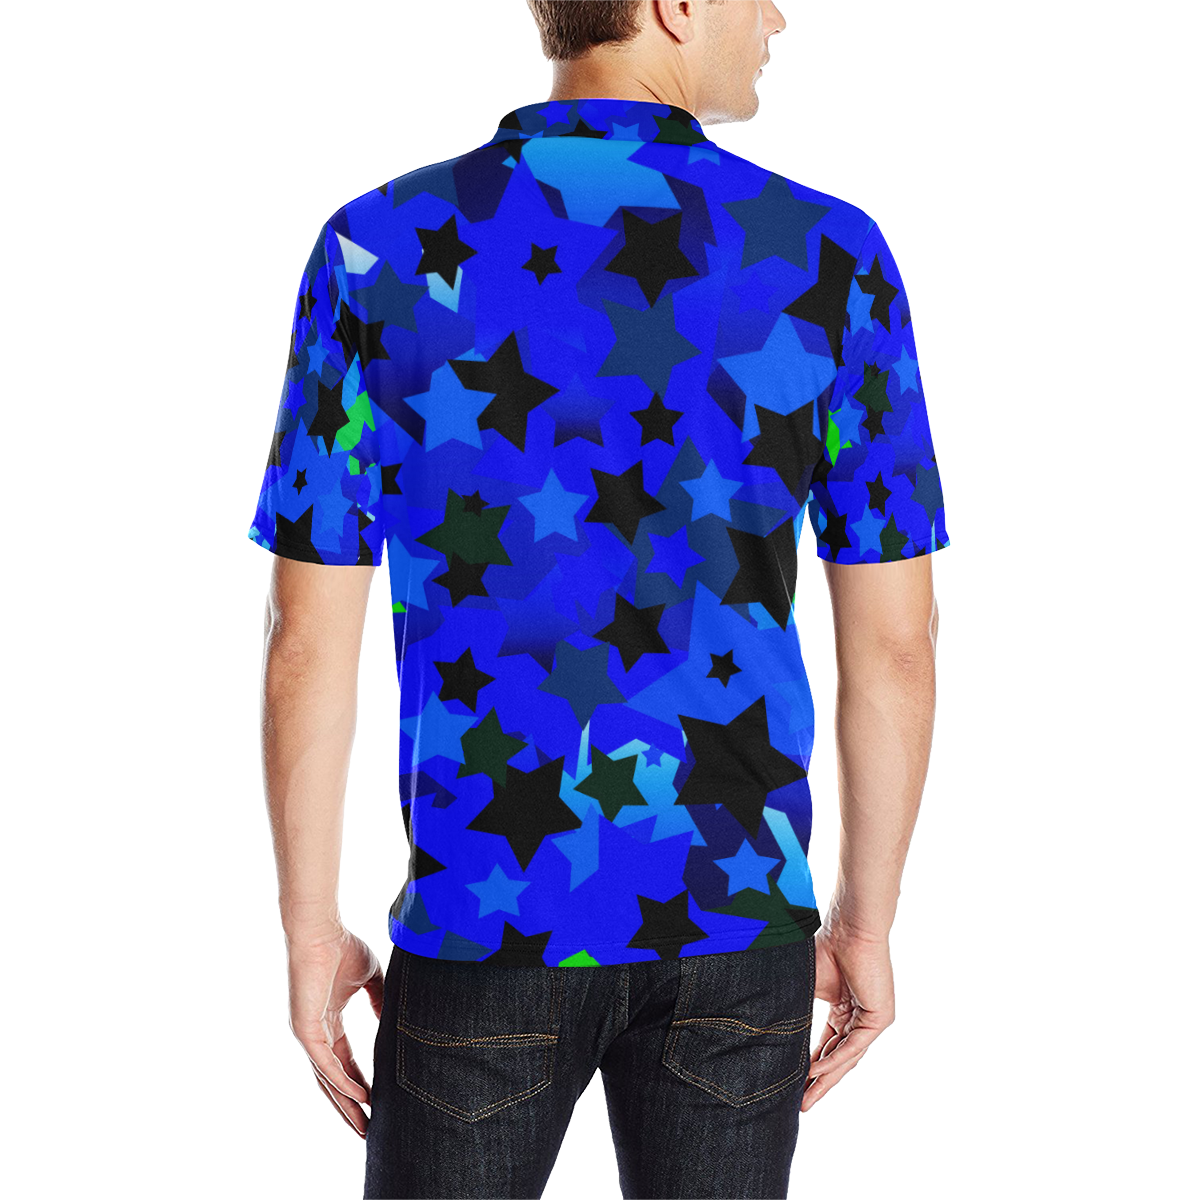 Punk Rock Stars Blue Men's All Over Print Polo Shirt (Model T55)